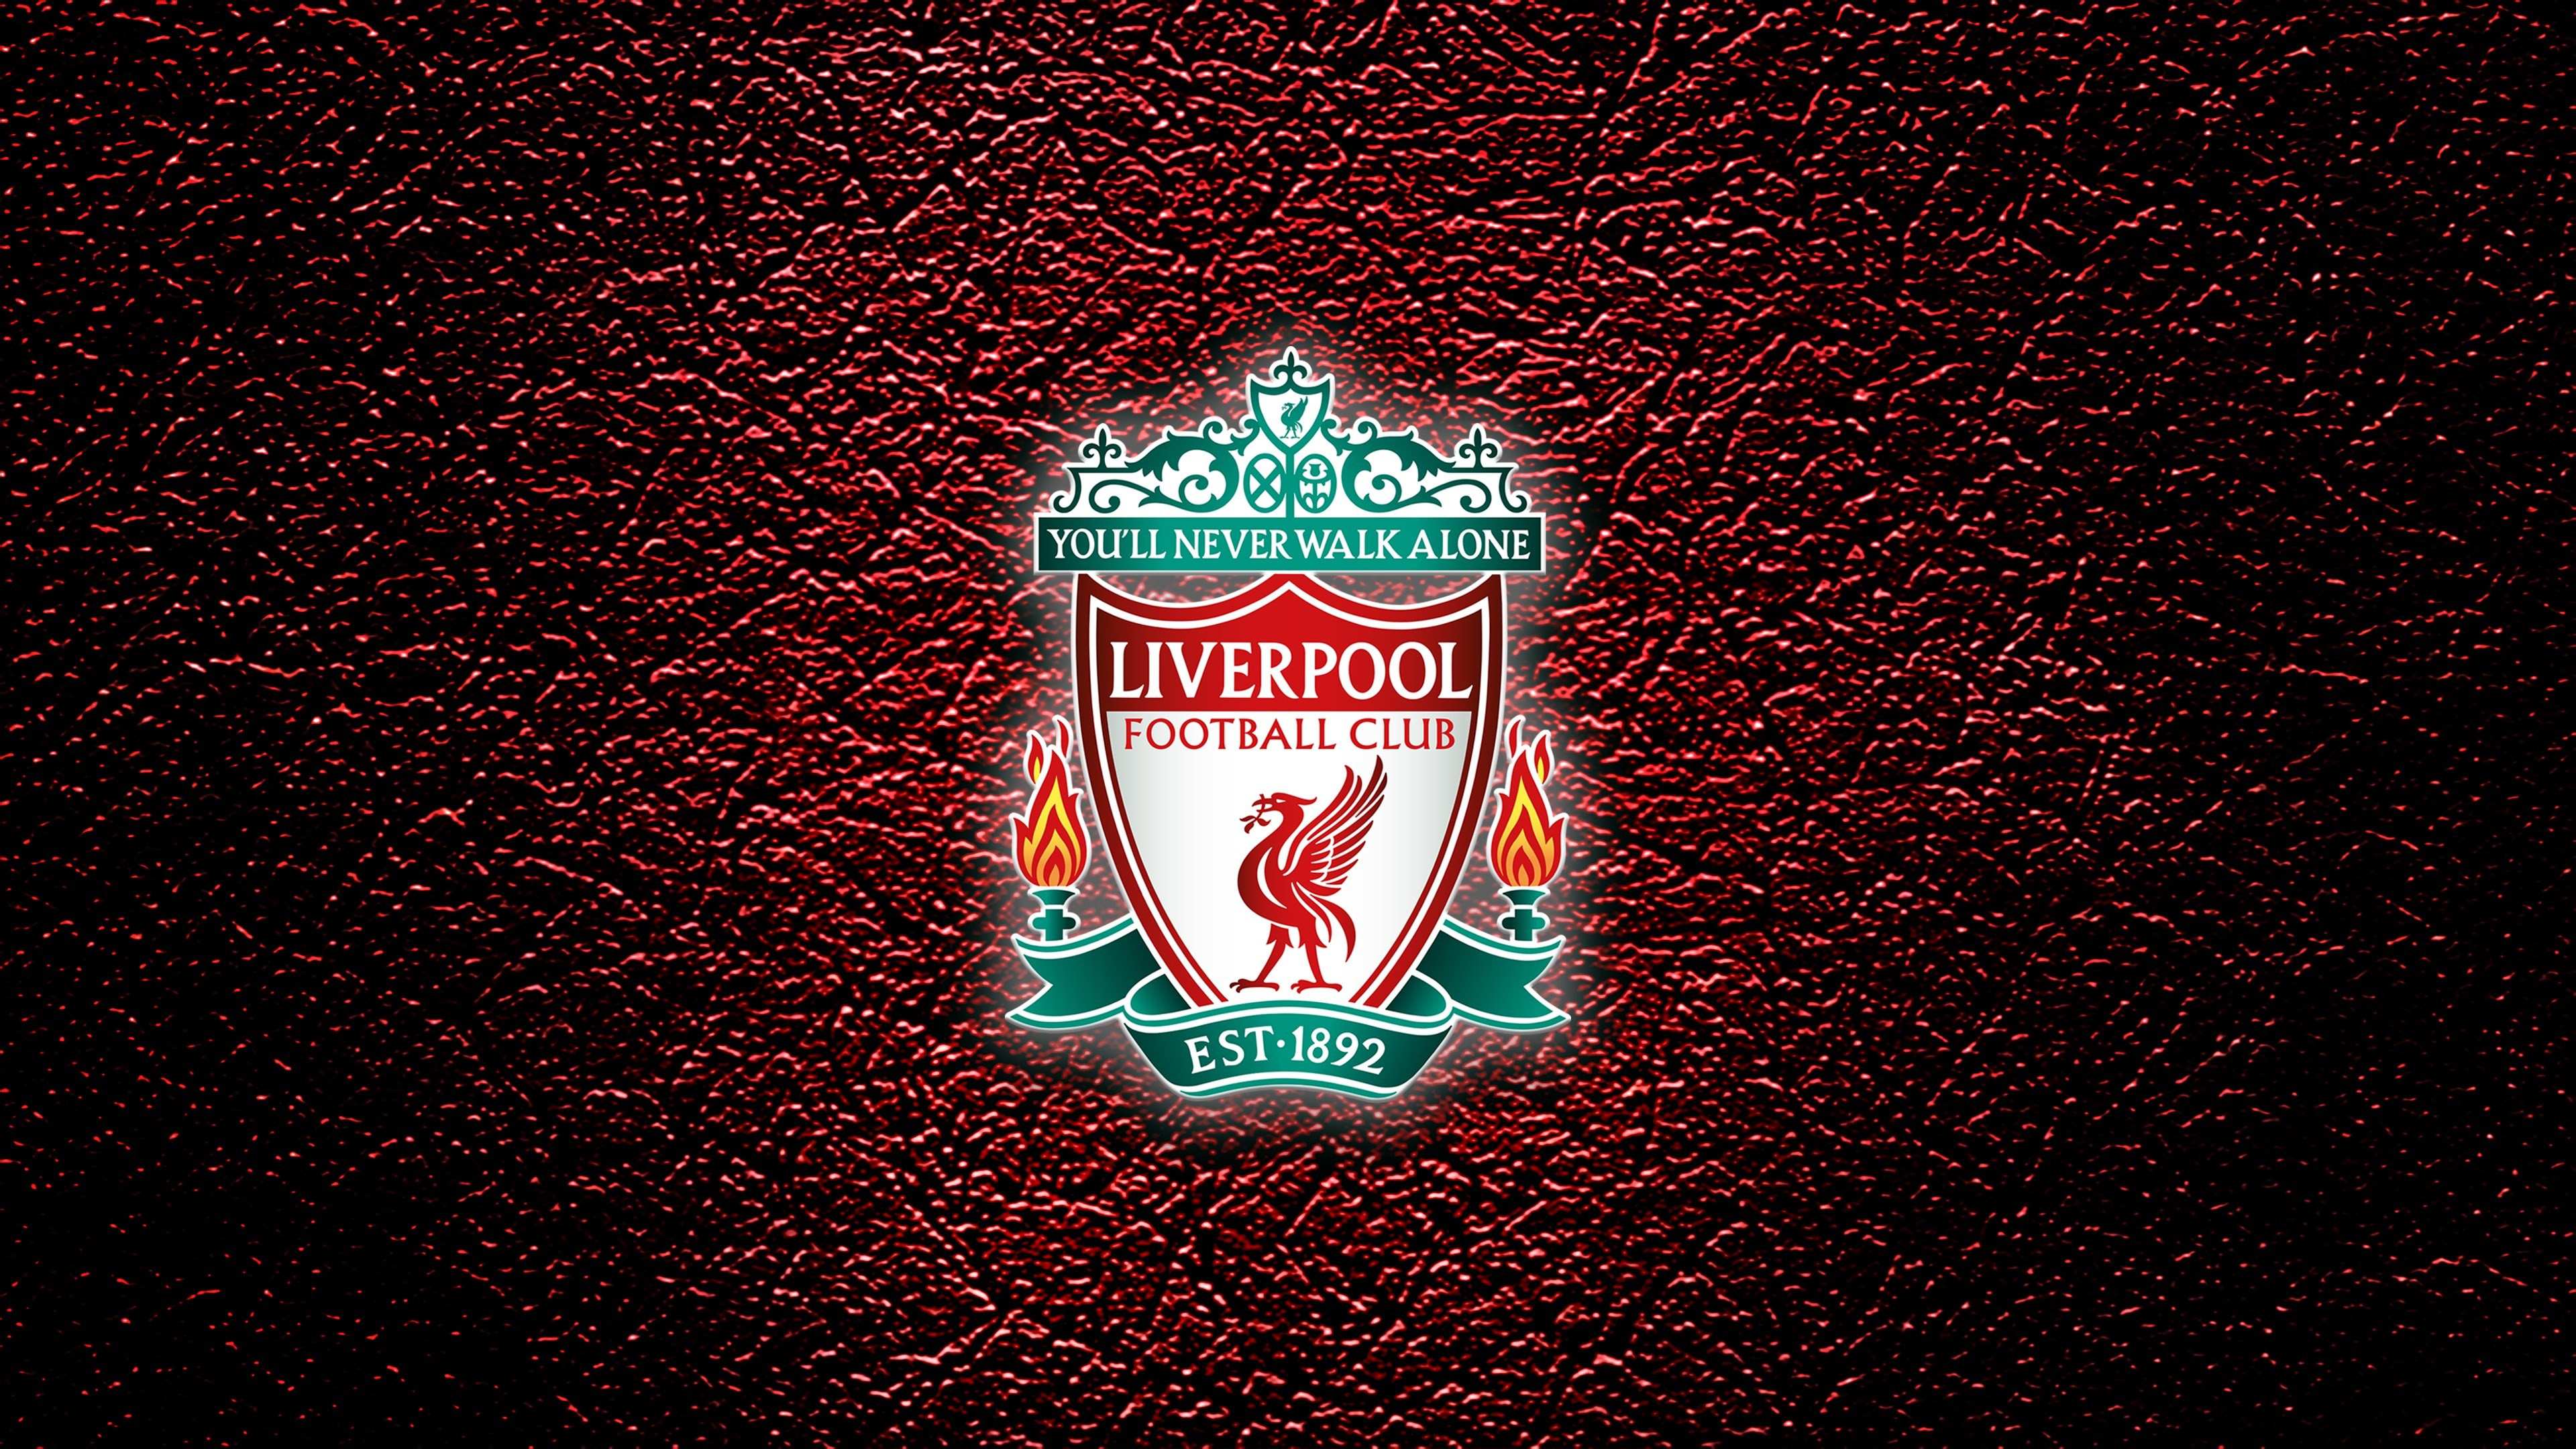 Liverpool - You'll never walk alone wallpaper 3840x2160